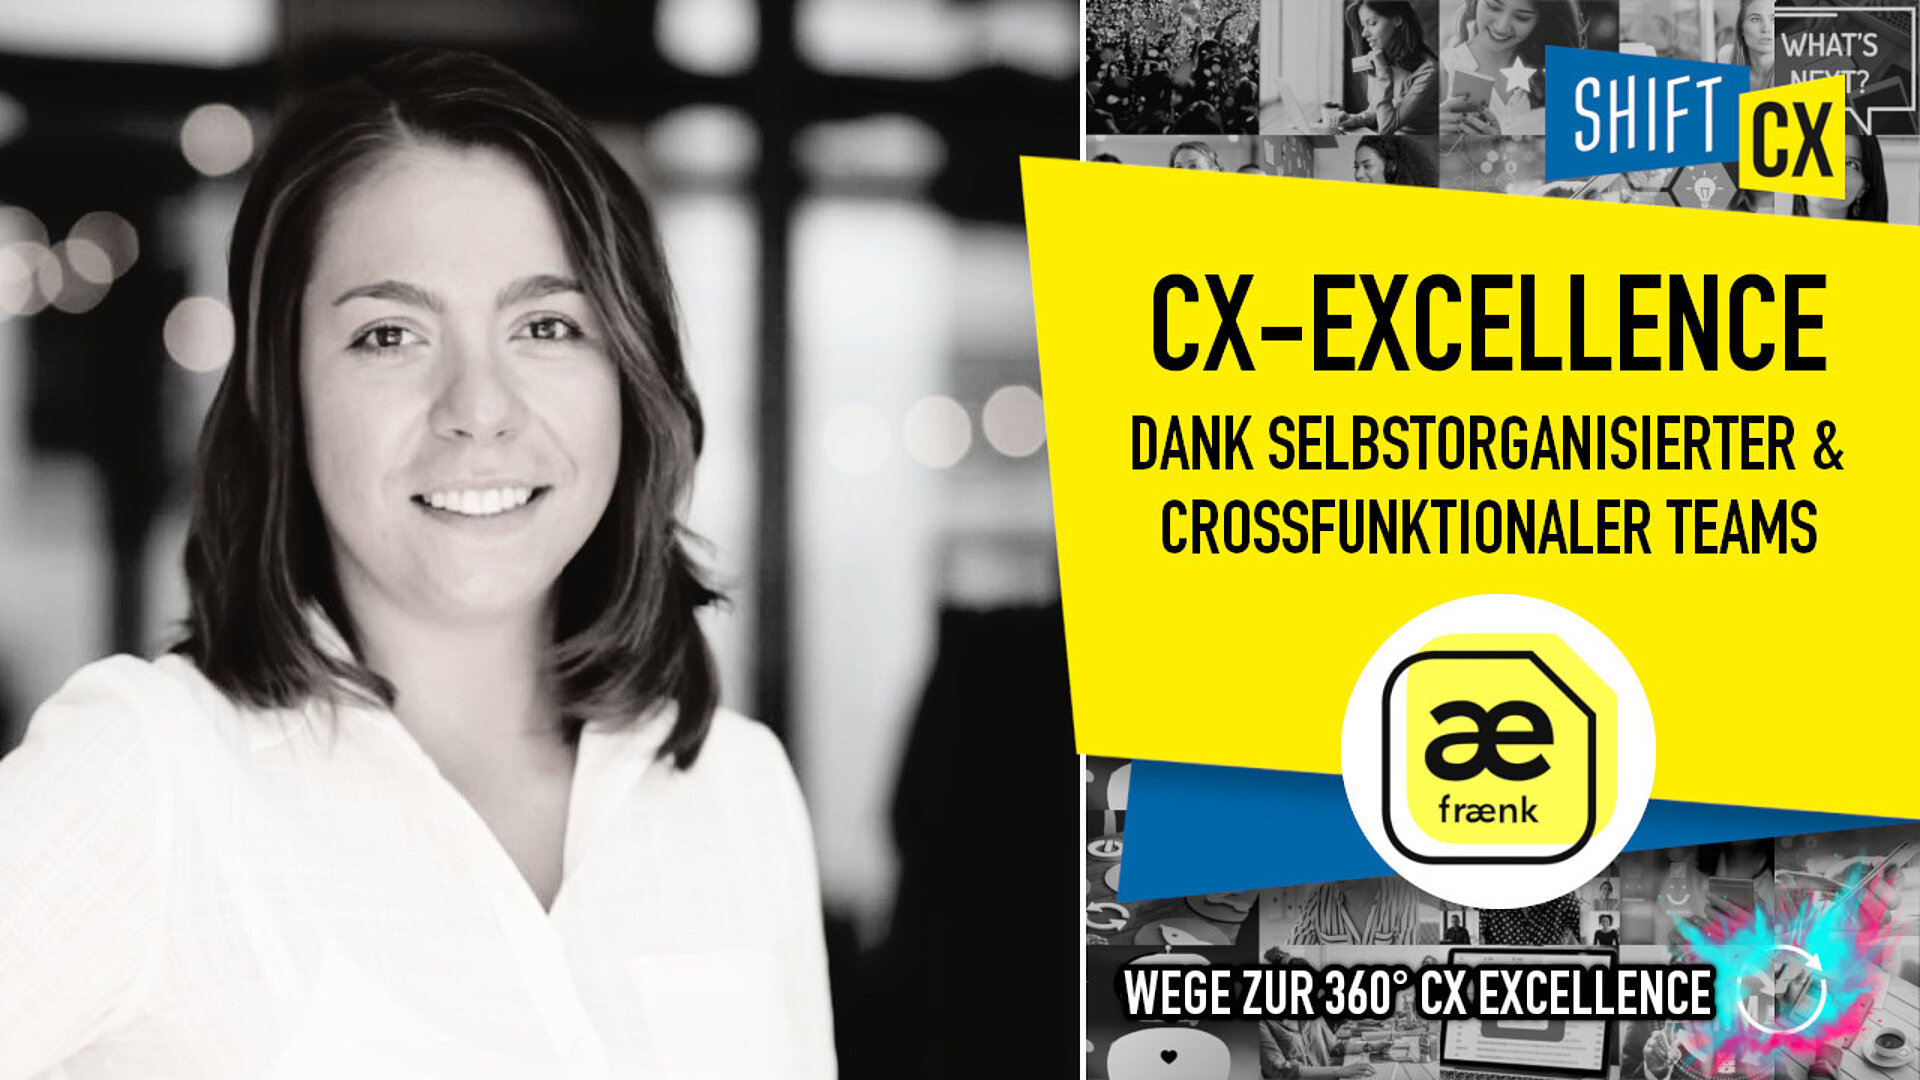 CX-Excellence dank selbstorganisierter & crossfunktionaler Teams 